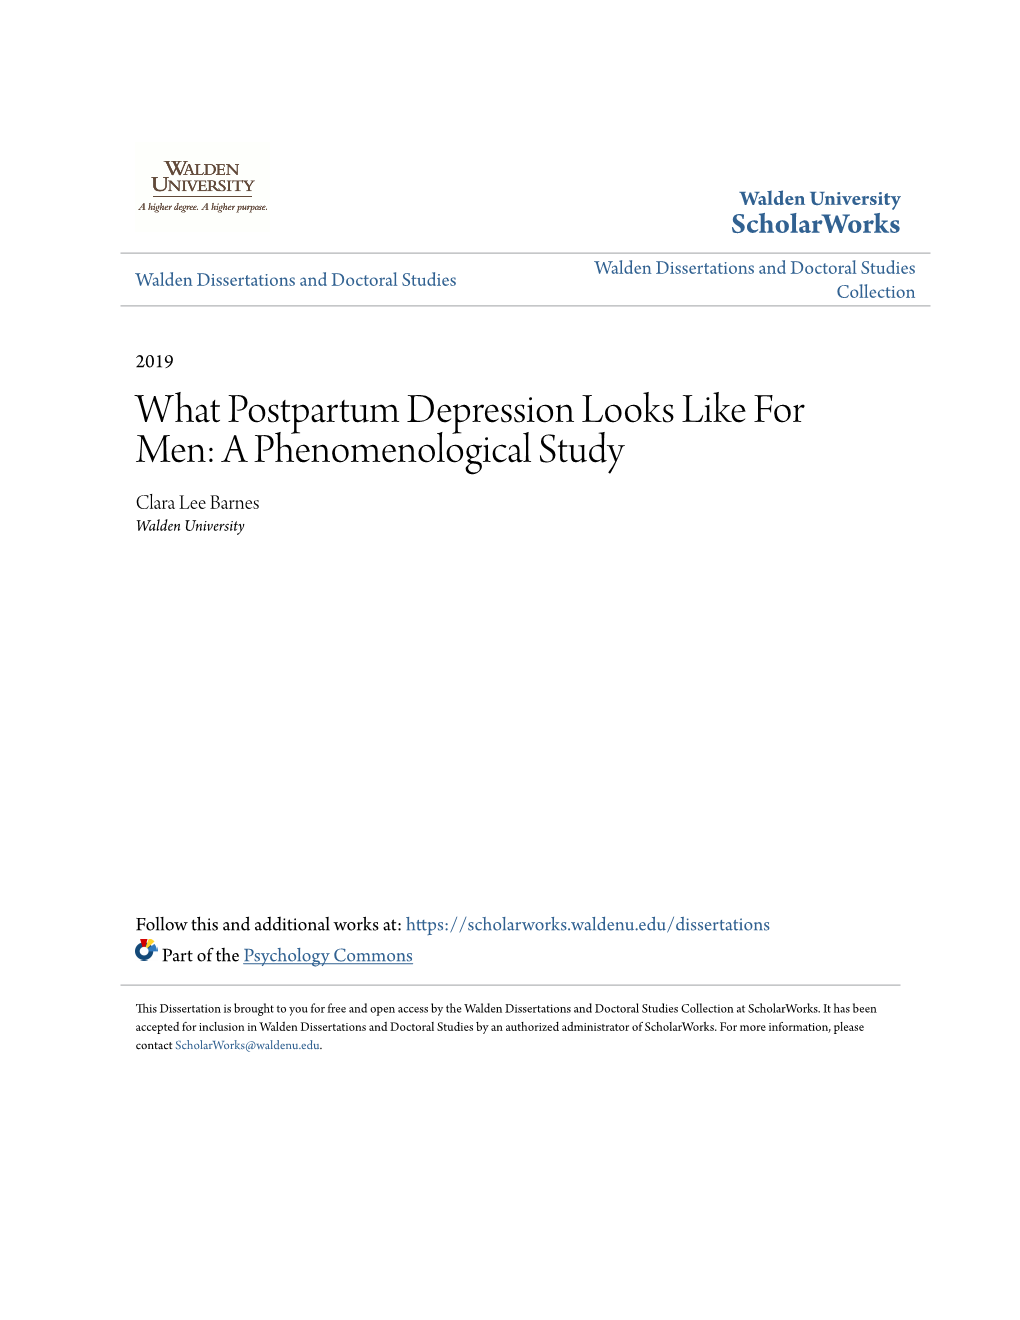 What Postpartum Depression Looks Like for Men: a Phenomenological Study Clara Lee Barnes Walden University